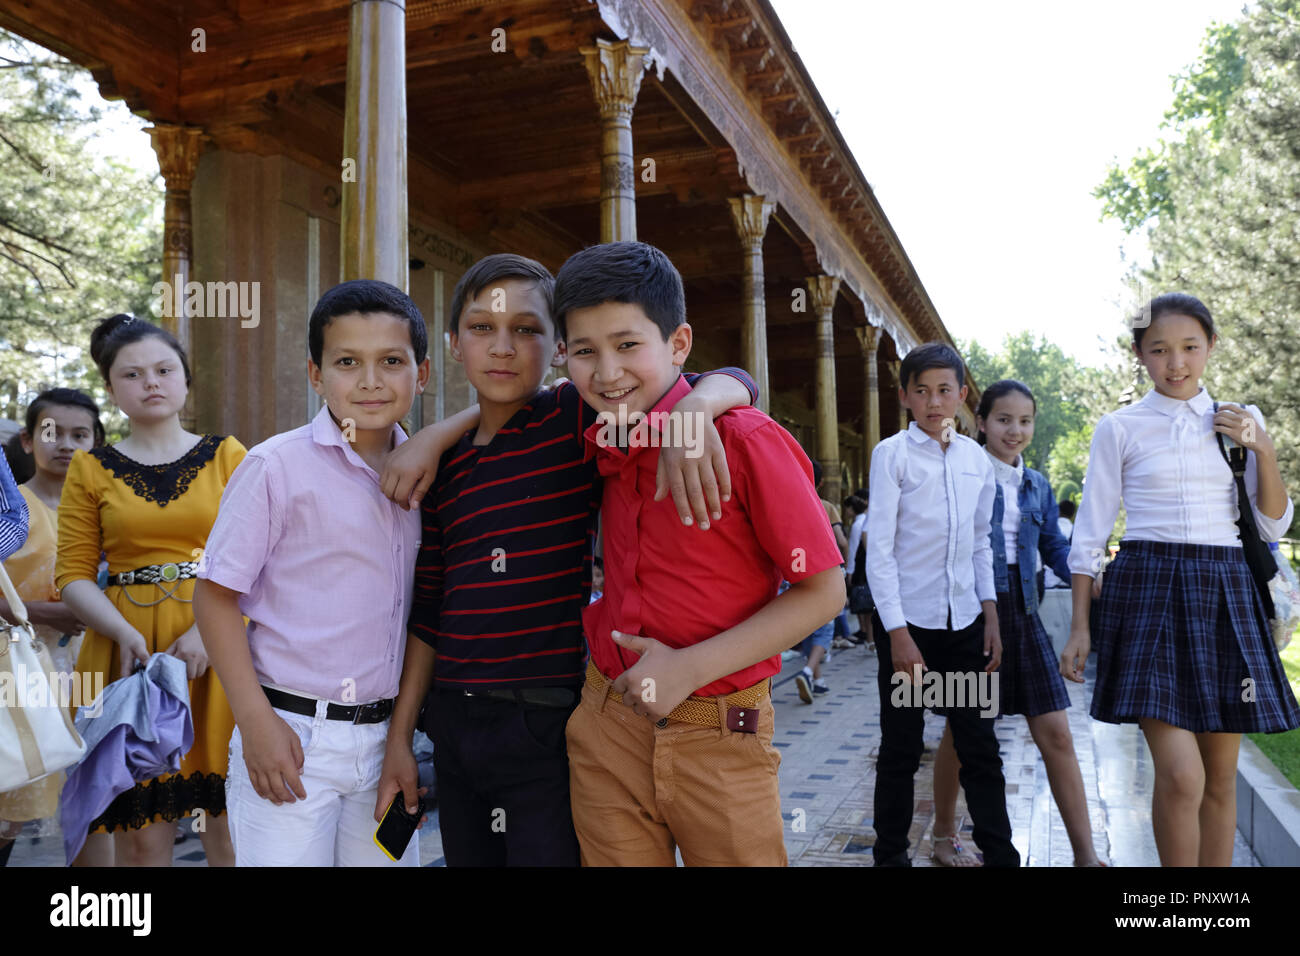 Tashkent, Uzbekistan - May 12, 2017: Playful children posing to camera during their visit to Independence square. Stock Photo